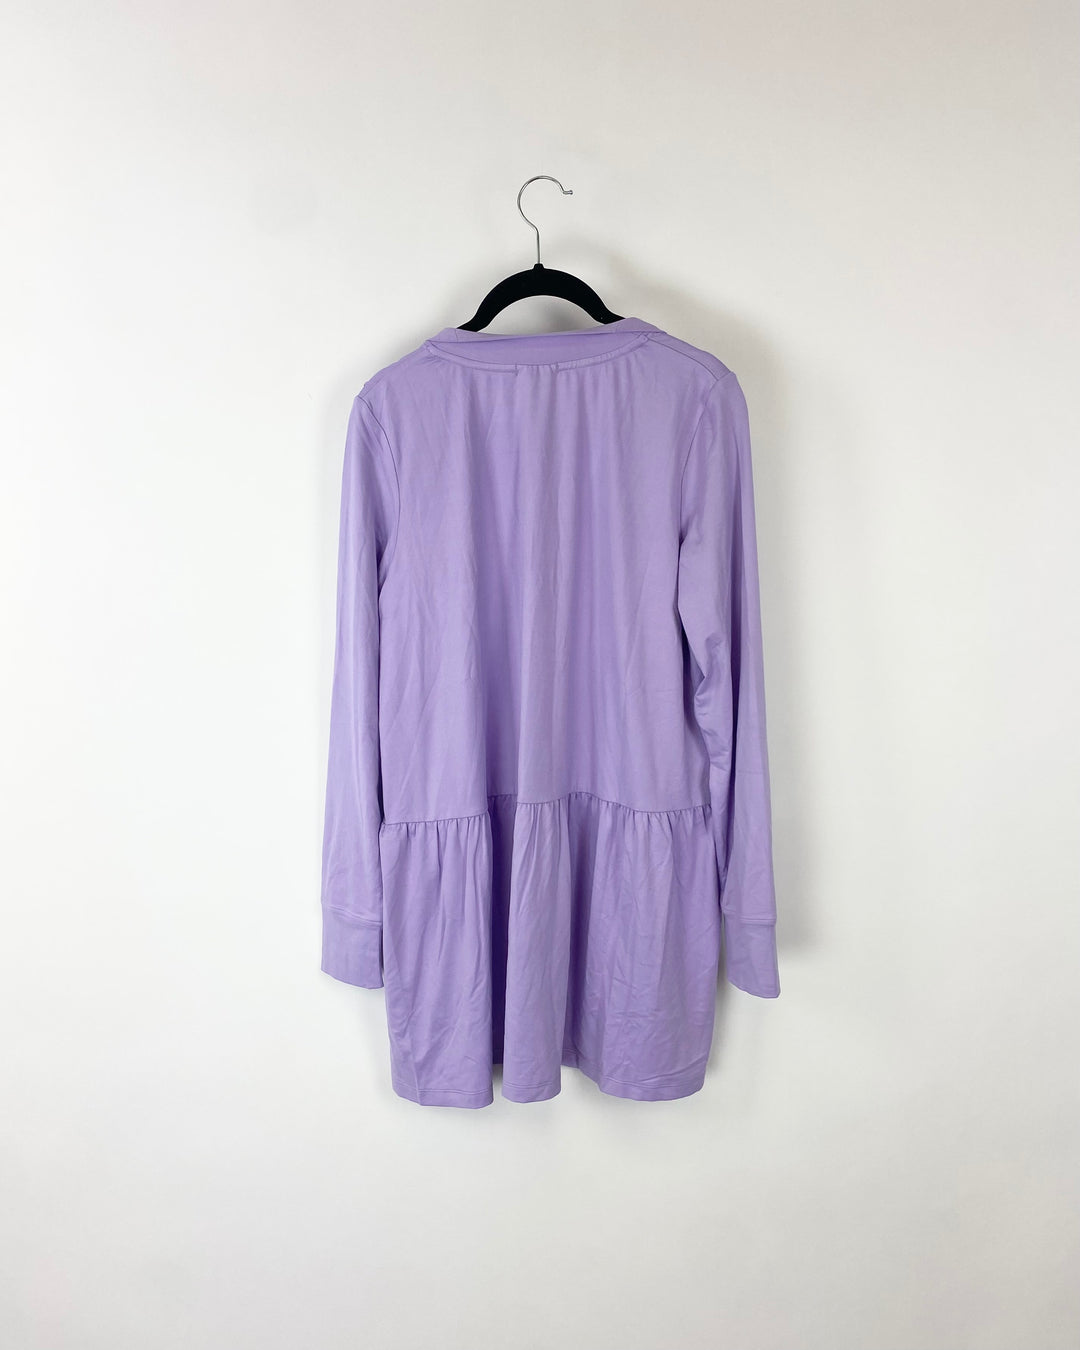 Purple Long Sleeve Cardigan - Size 6/8